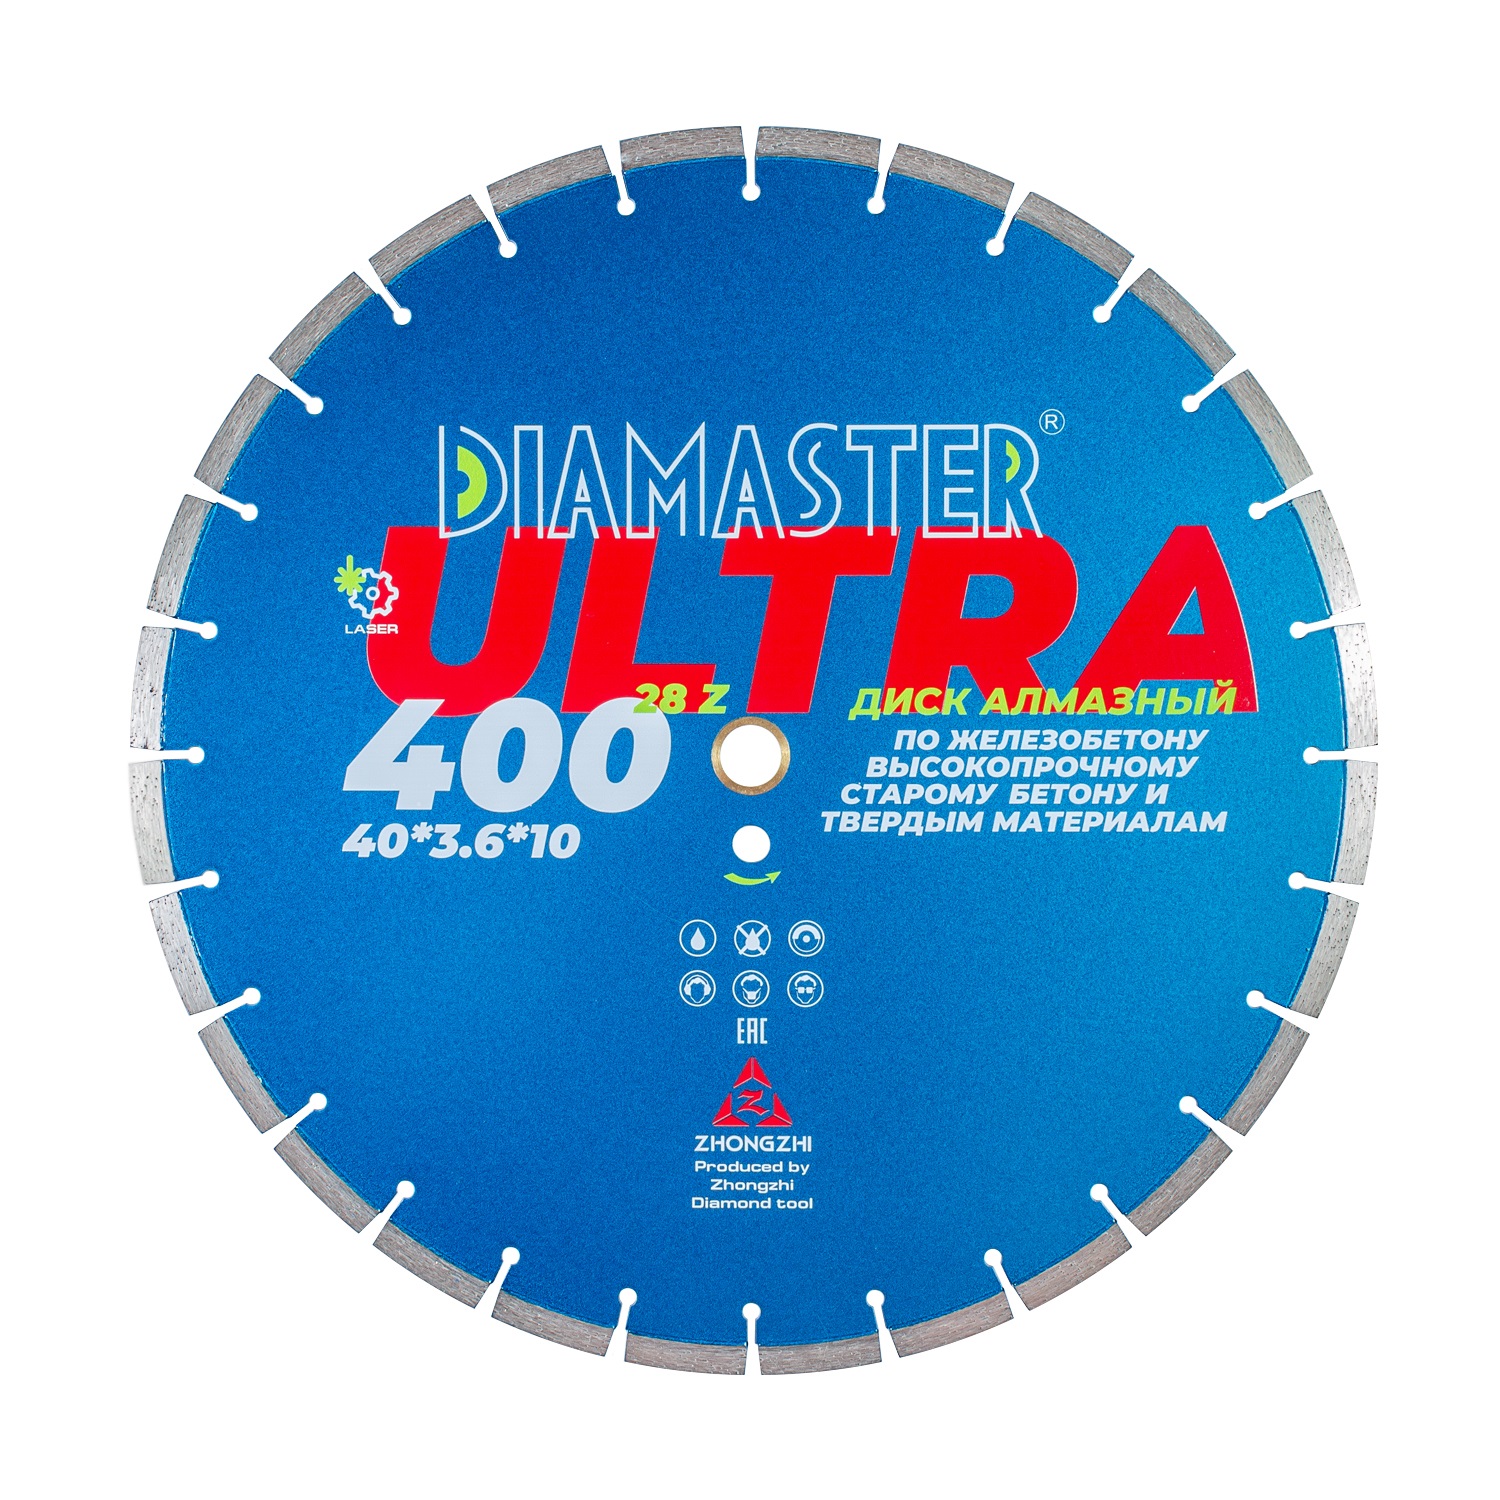 Диск сегментный Laser ULTRA д.400*2,6*25,4 (40*3,6*10)мм | 28z/железобетон/wet/dry DIAMASTER диск турбо wave gold д 230 22 2 2 8 7 мм универсал dry diamaster